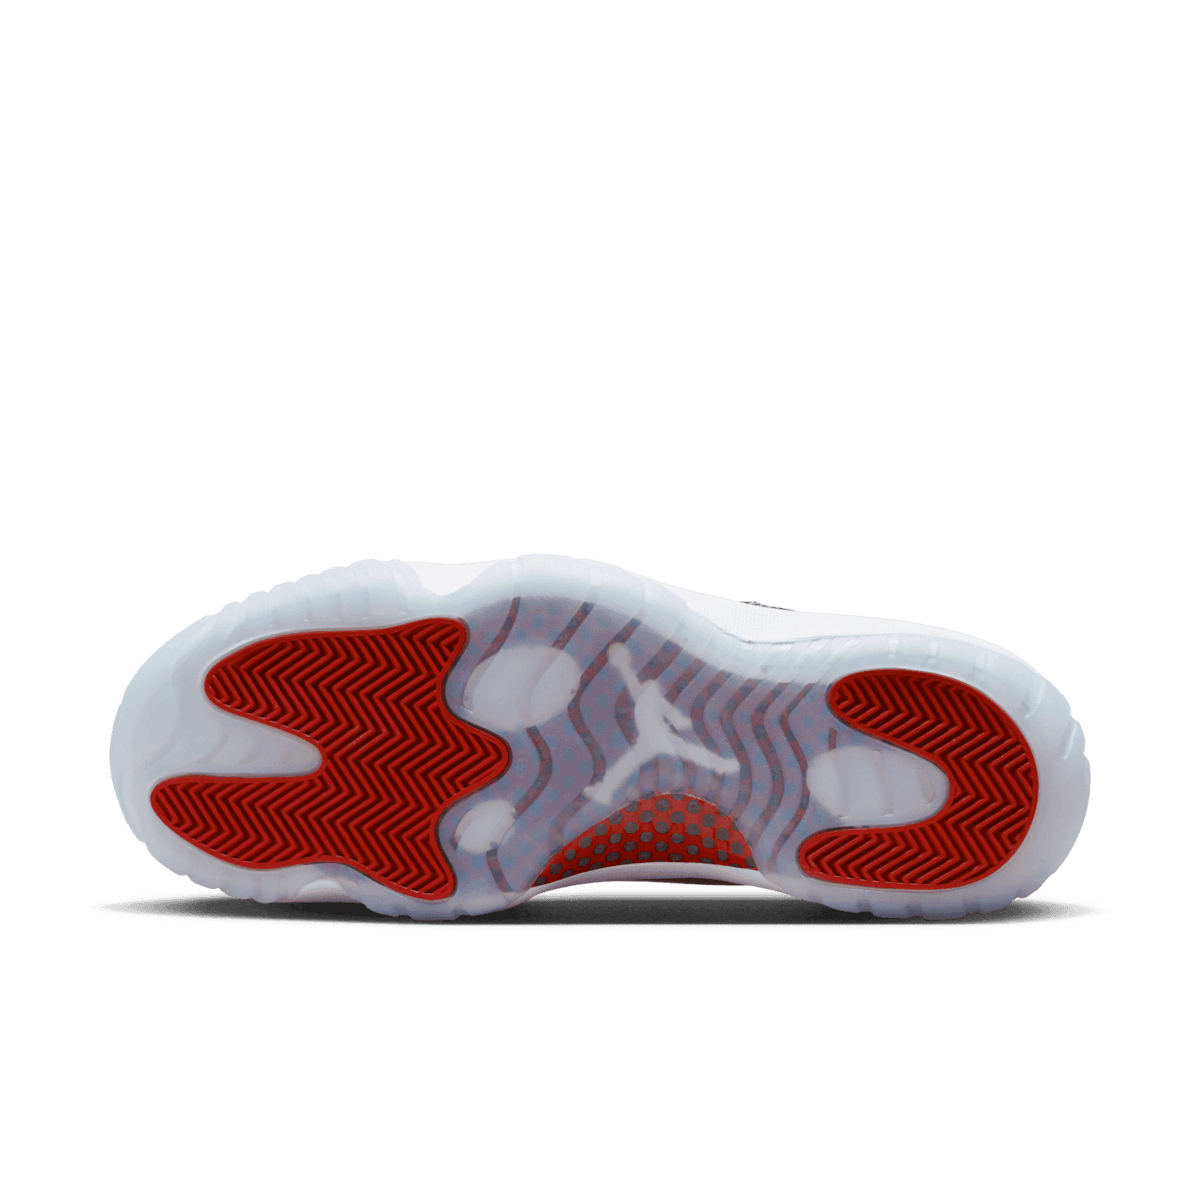 Air Jordan 11 Cherry Angle 0